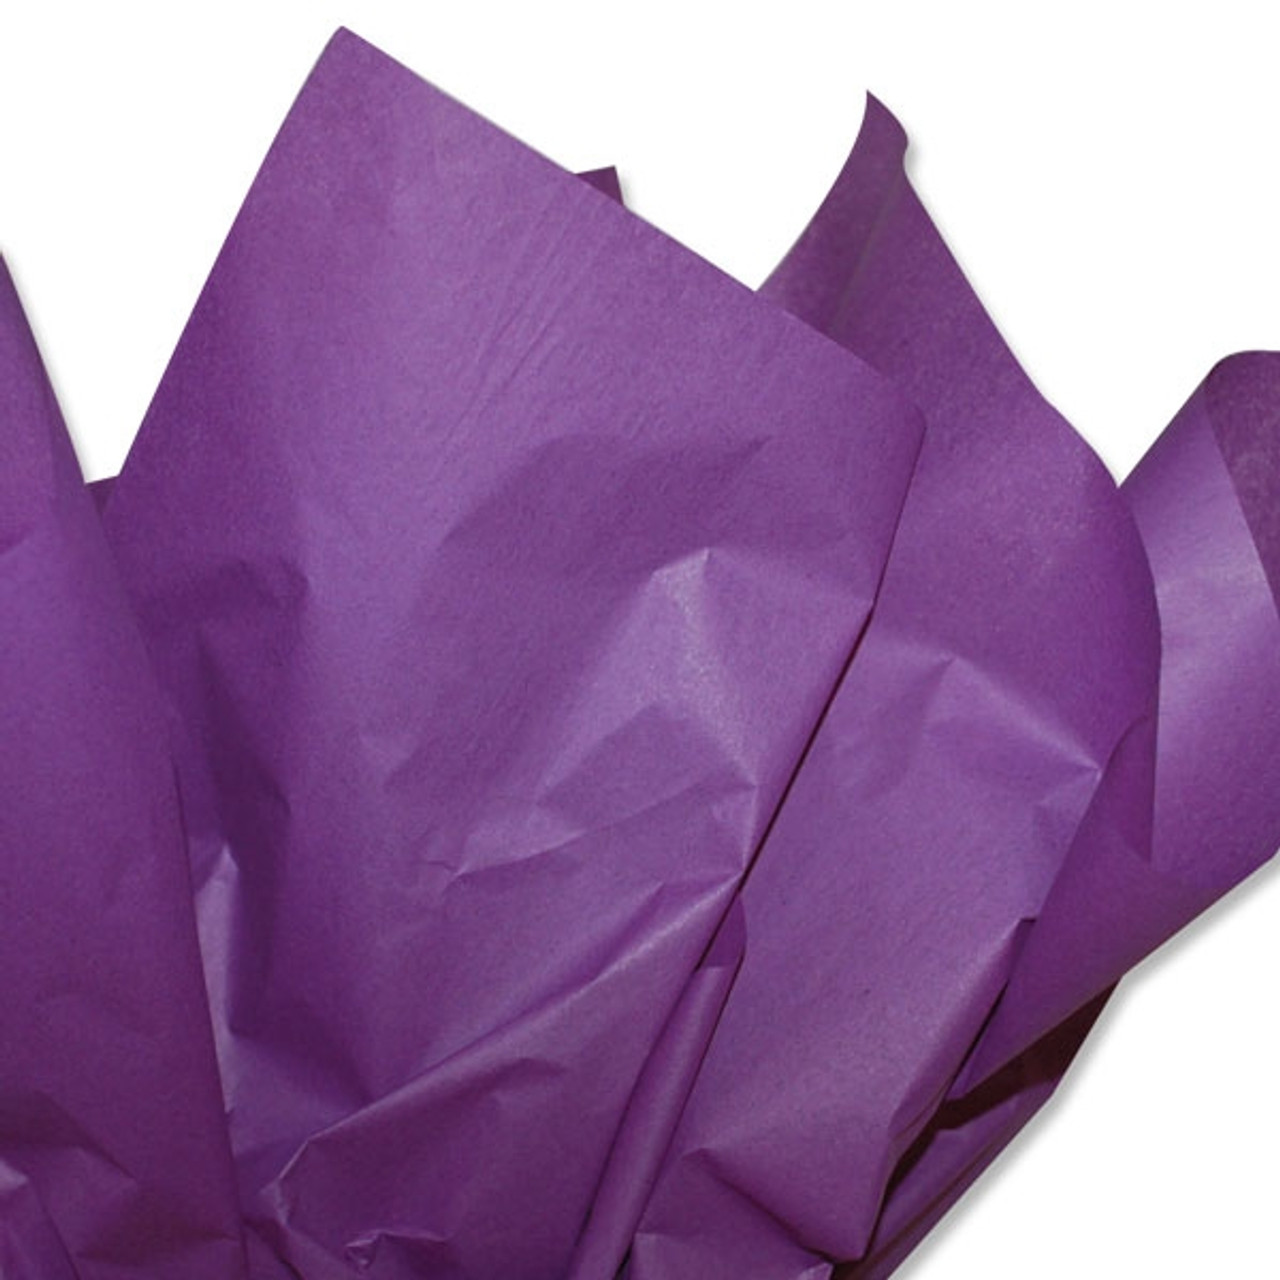 Colored Tissue Paper -NE-148 - Hot Pink - 480 Sheets per Ream